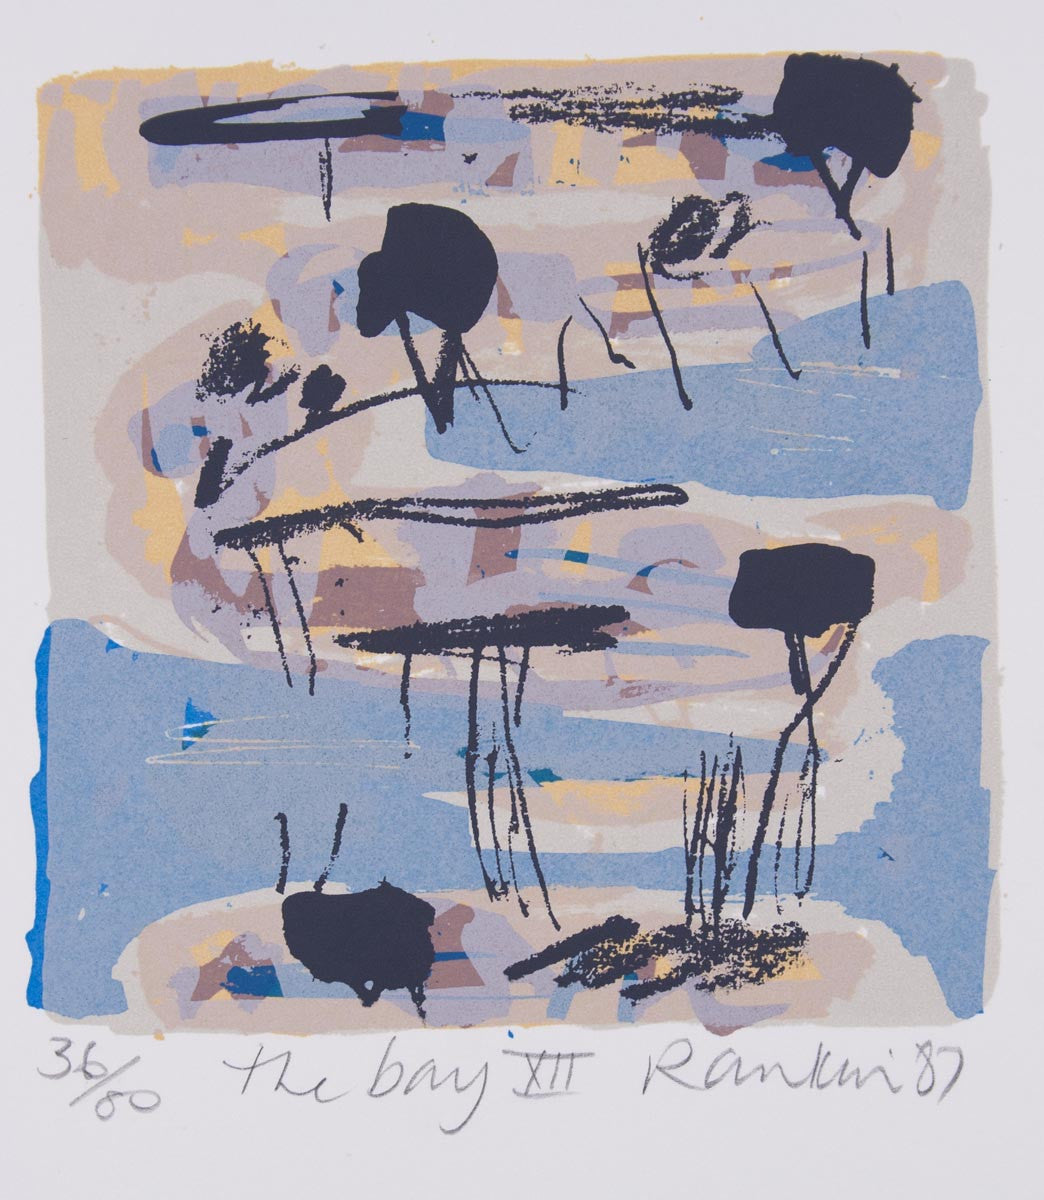 David Rankin 'The Bay XII' - screenprint on paper